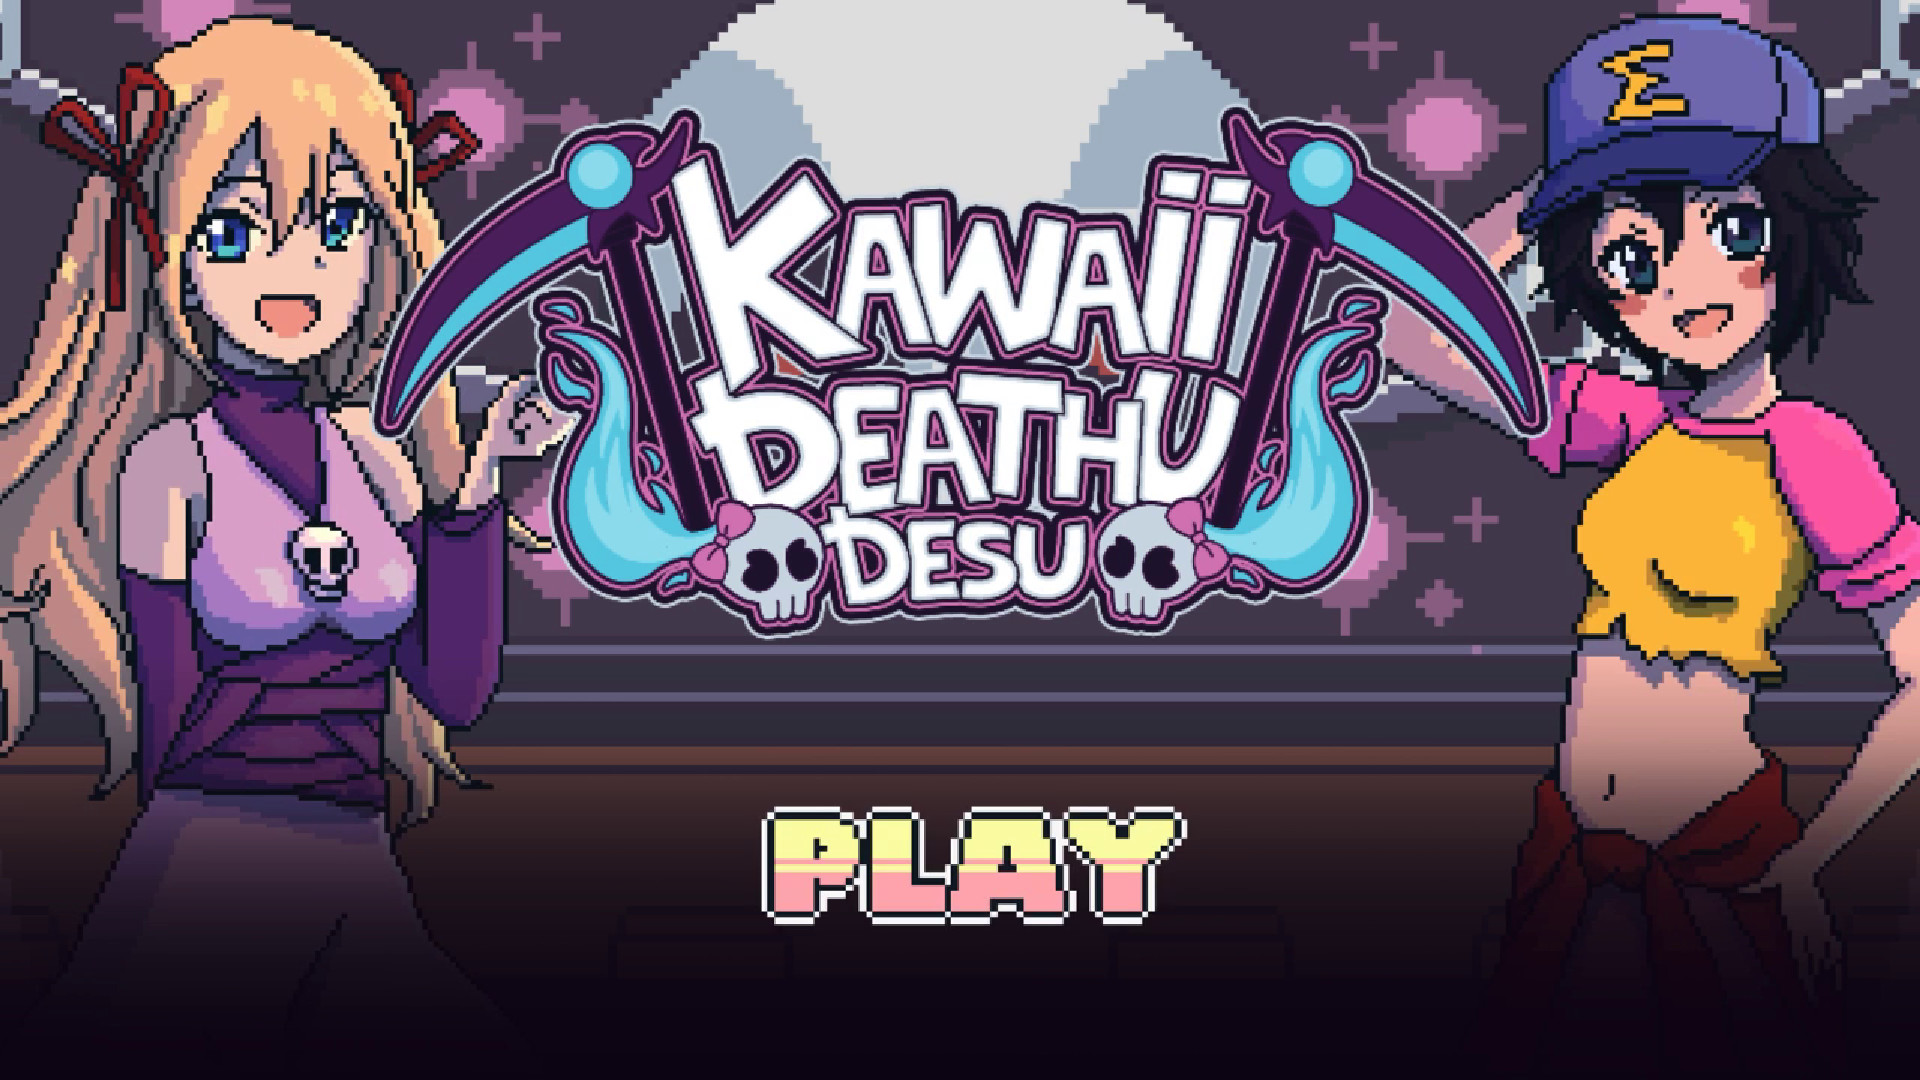 Find the best laptops for Kawaii Deathu Desu